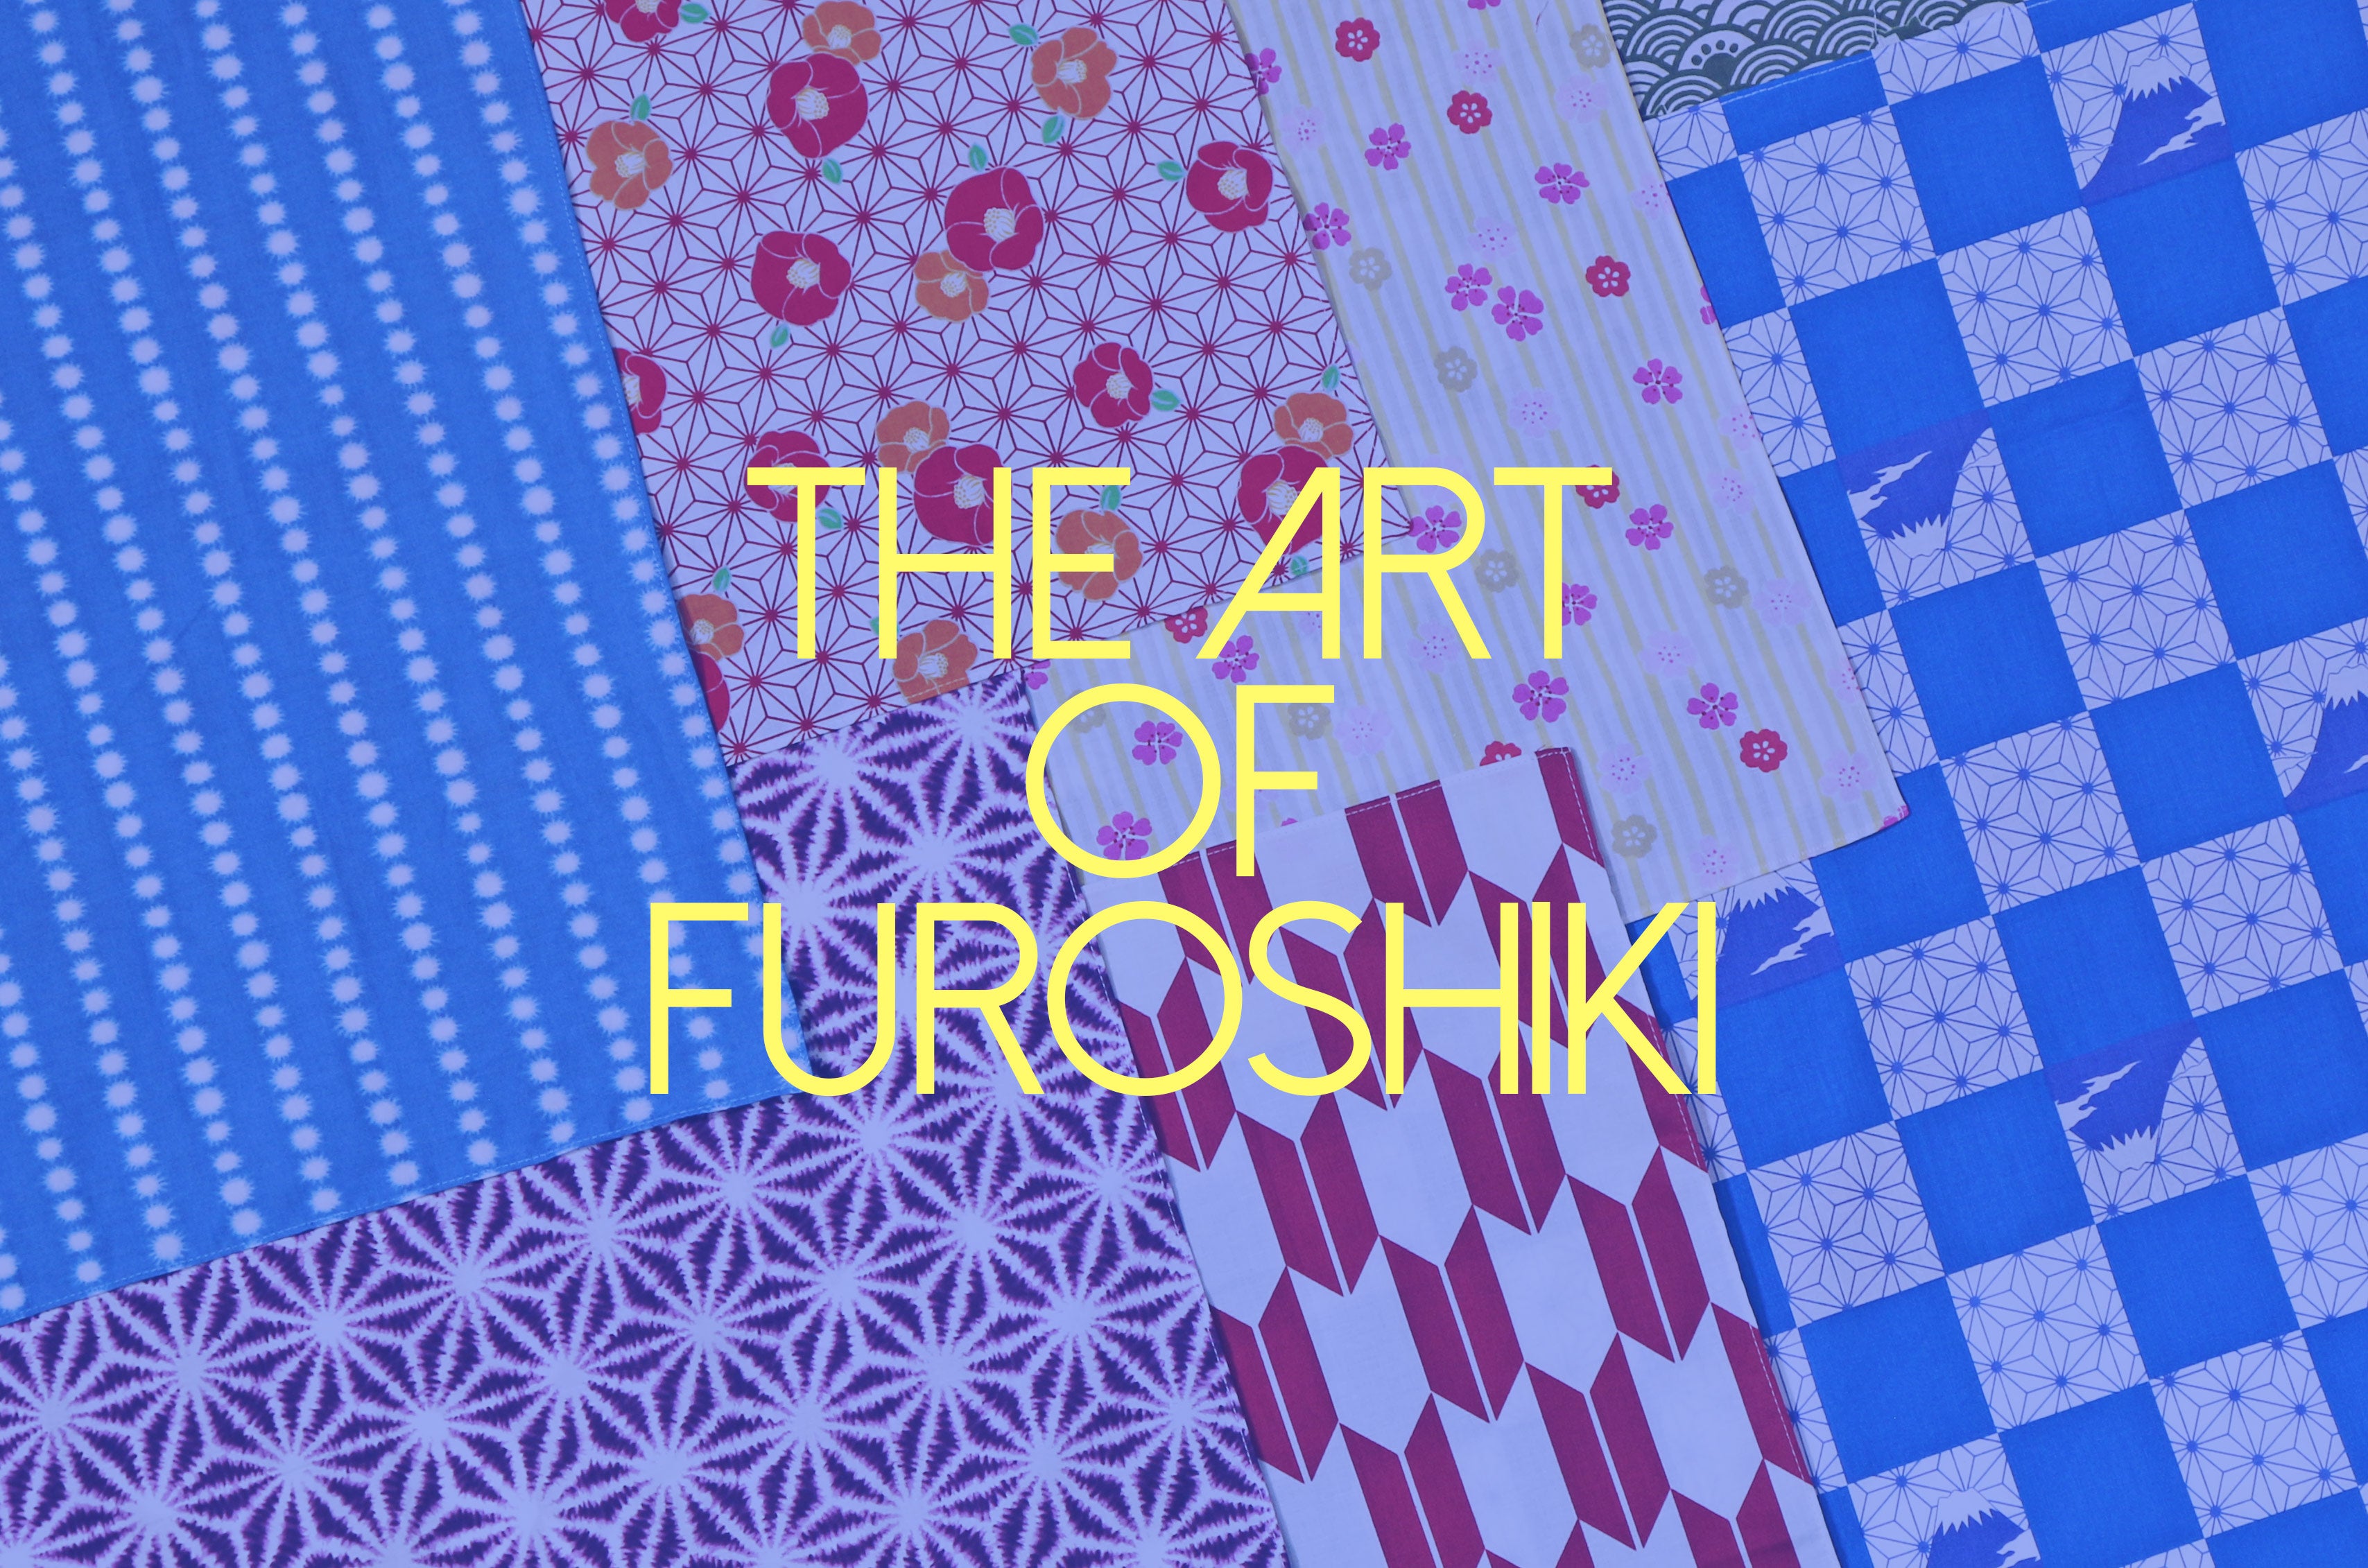 Furoshiki - The Art of Gift Wrap